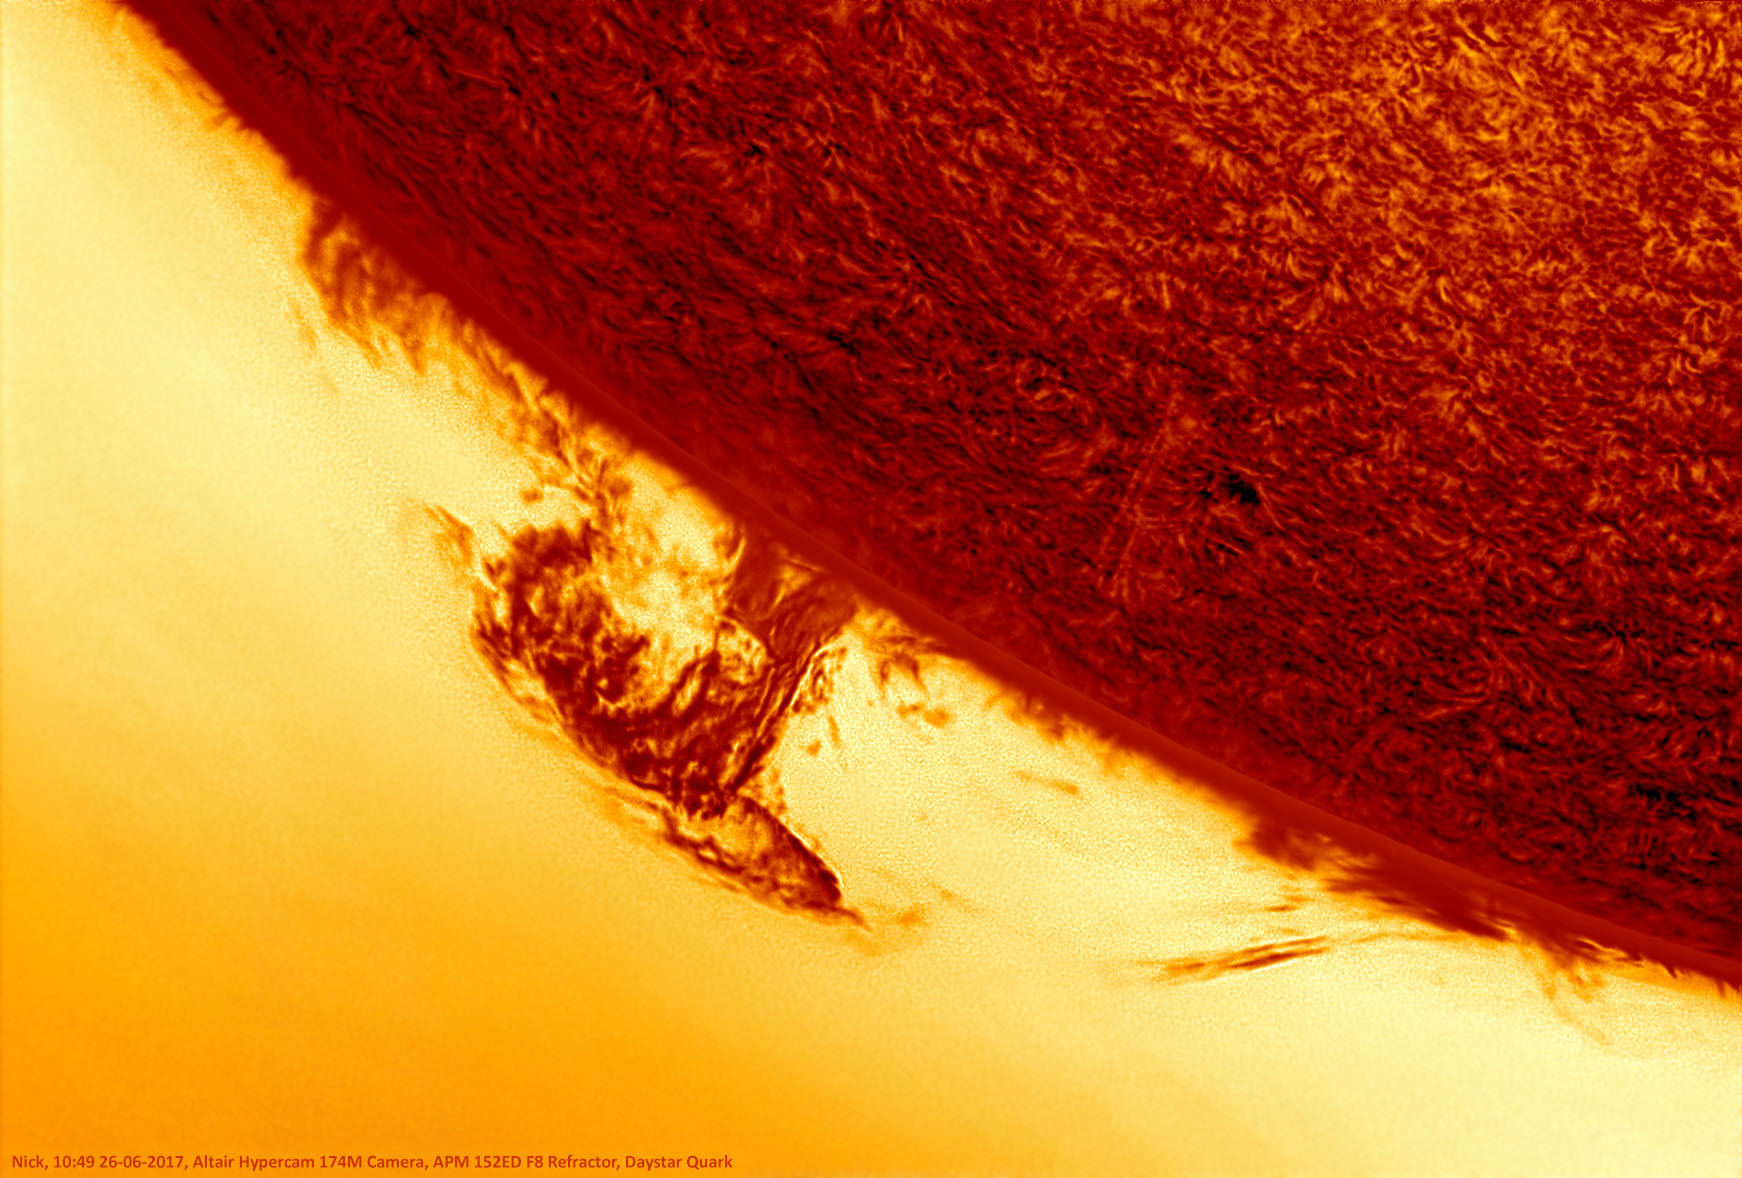 Solar image by Nick Vermeulen